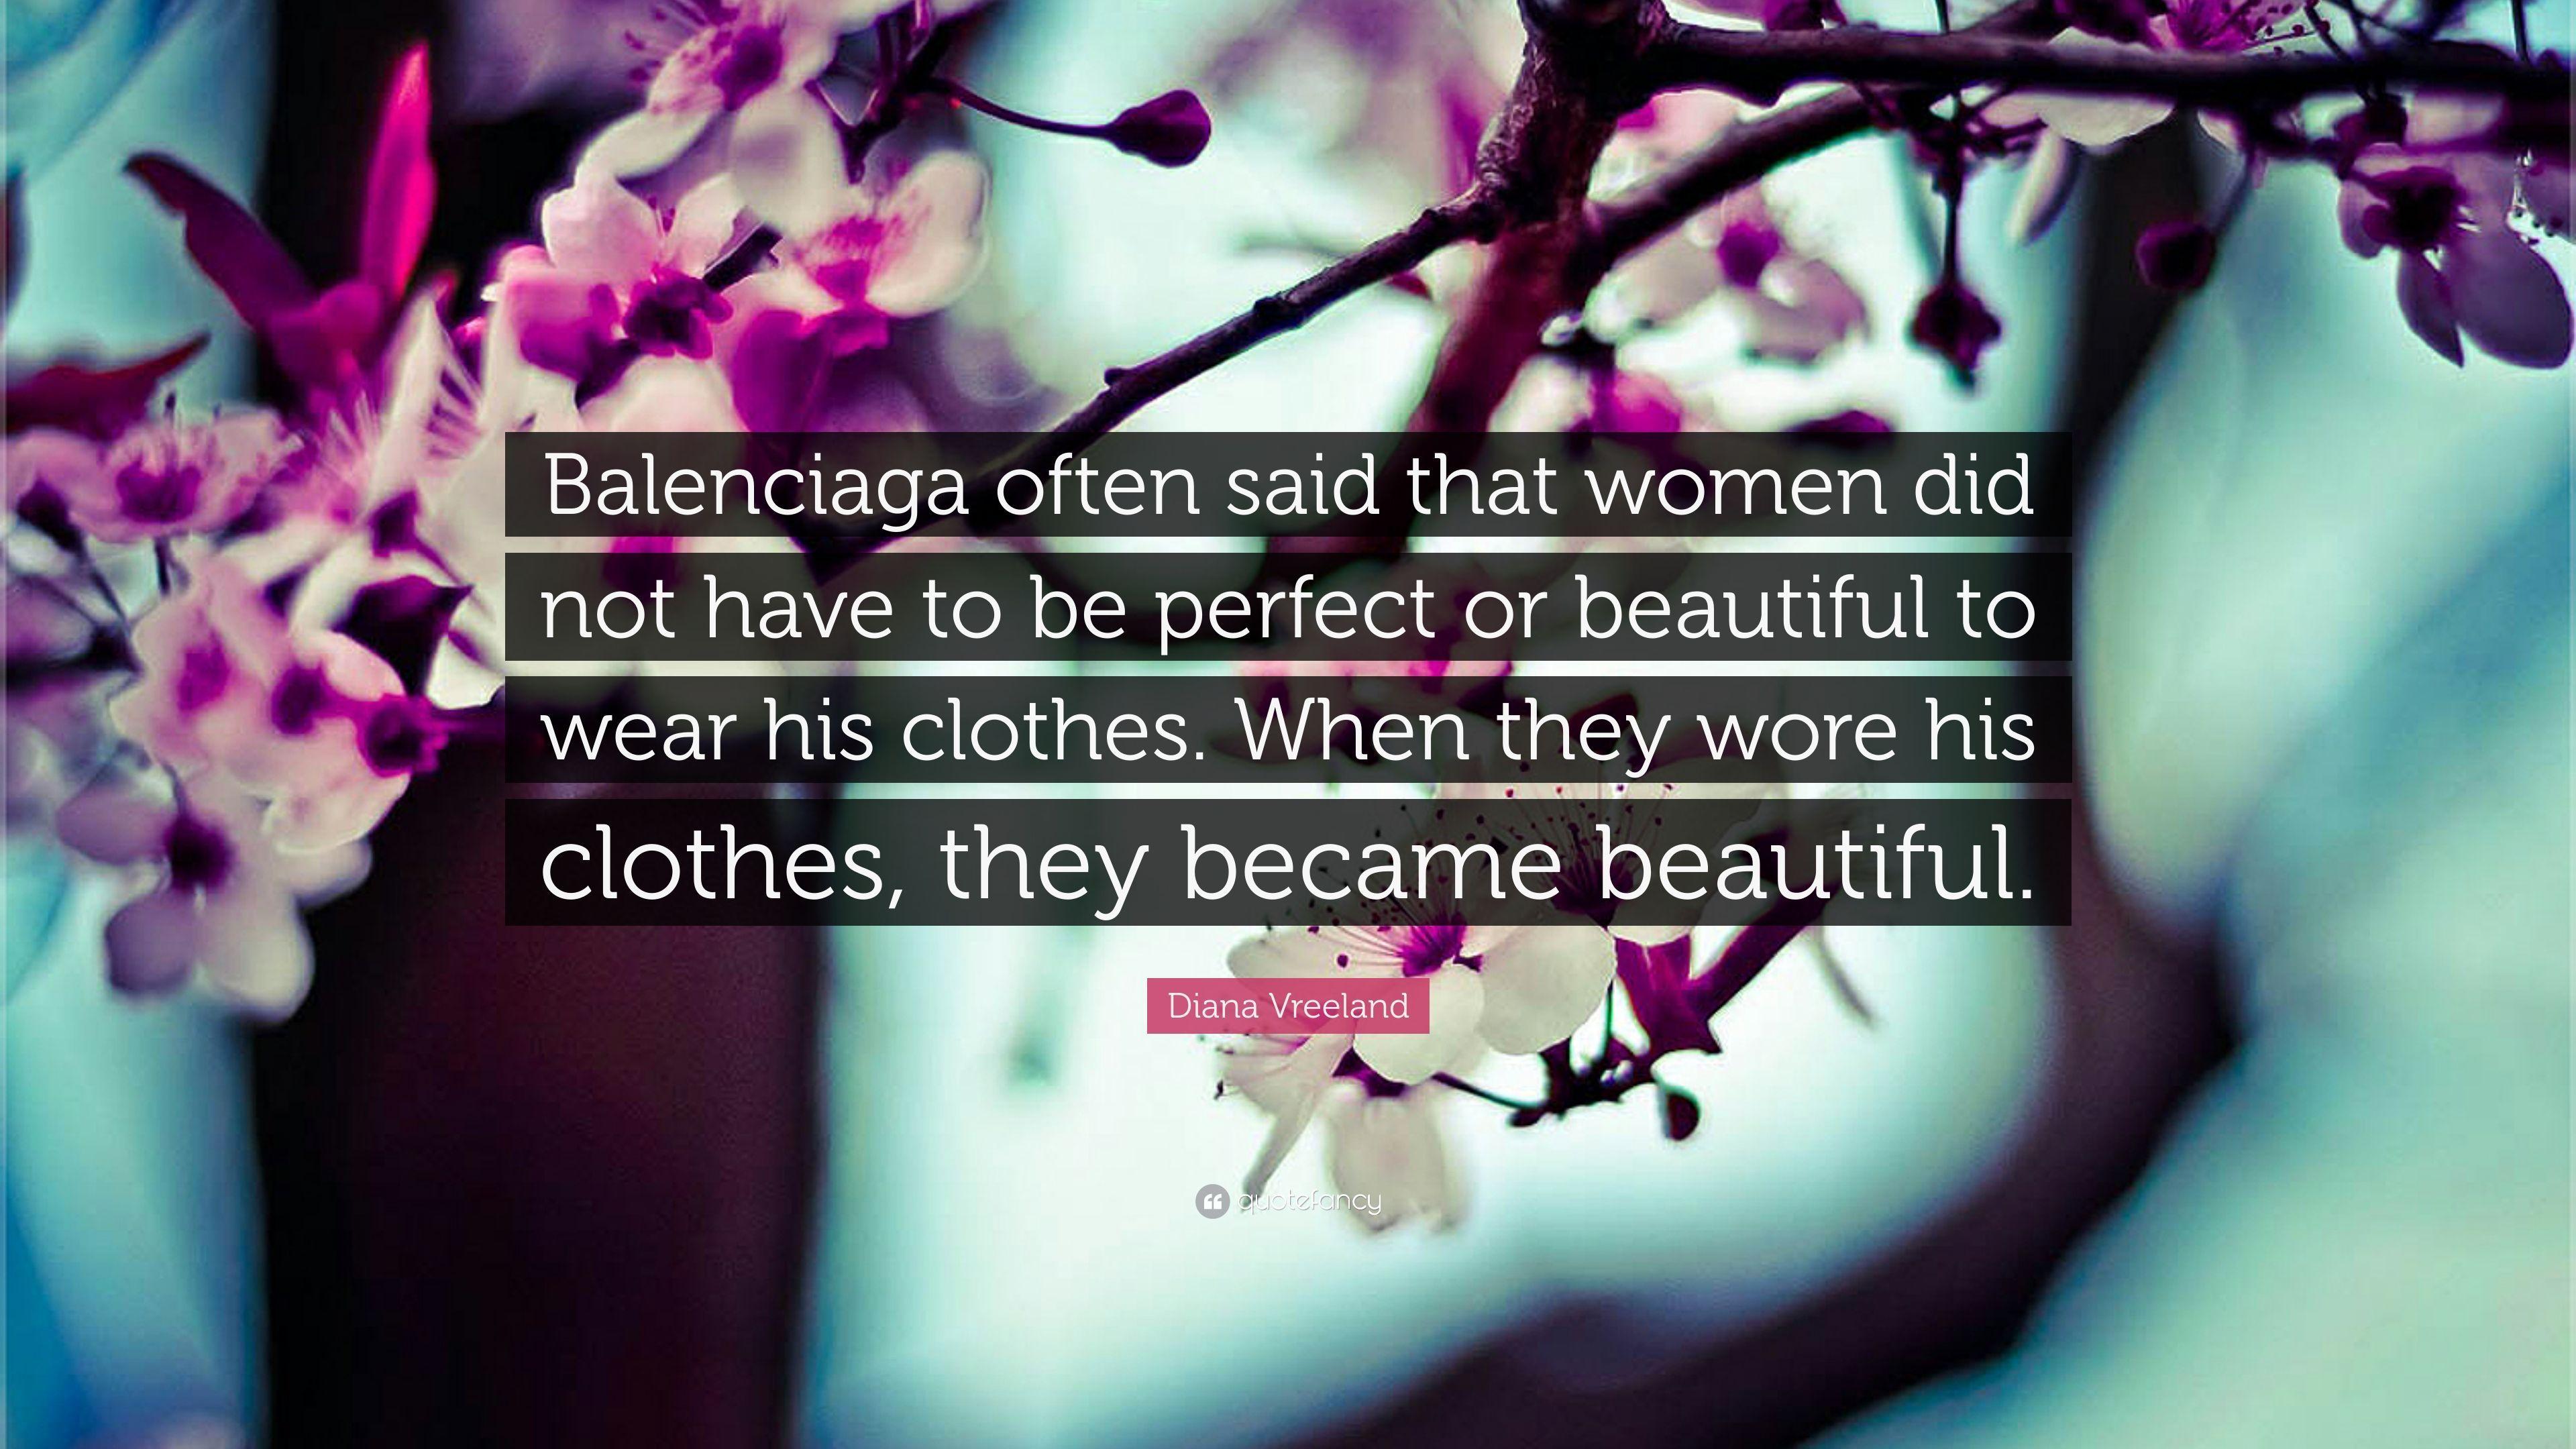 Diana Vreeland Quote: “Balenciaga often said that women did not